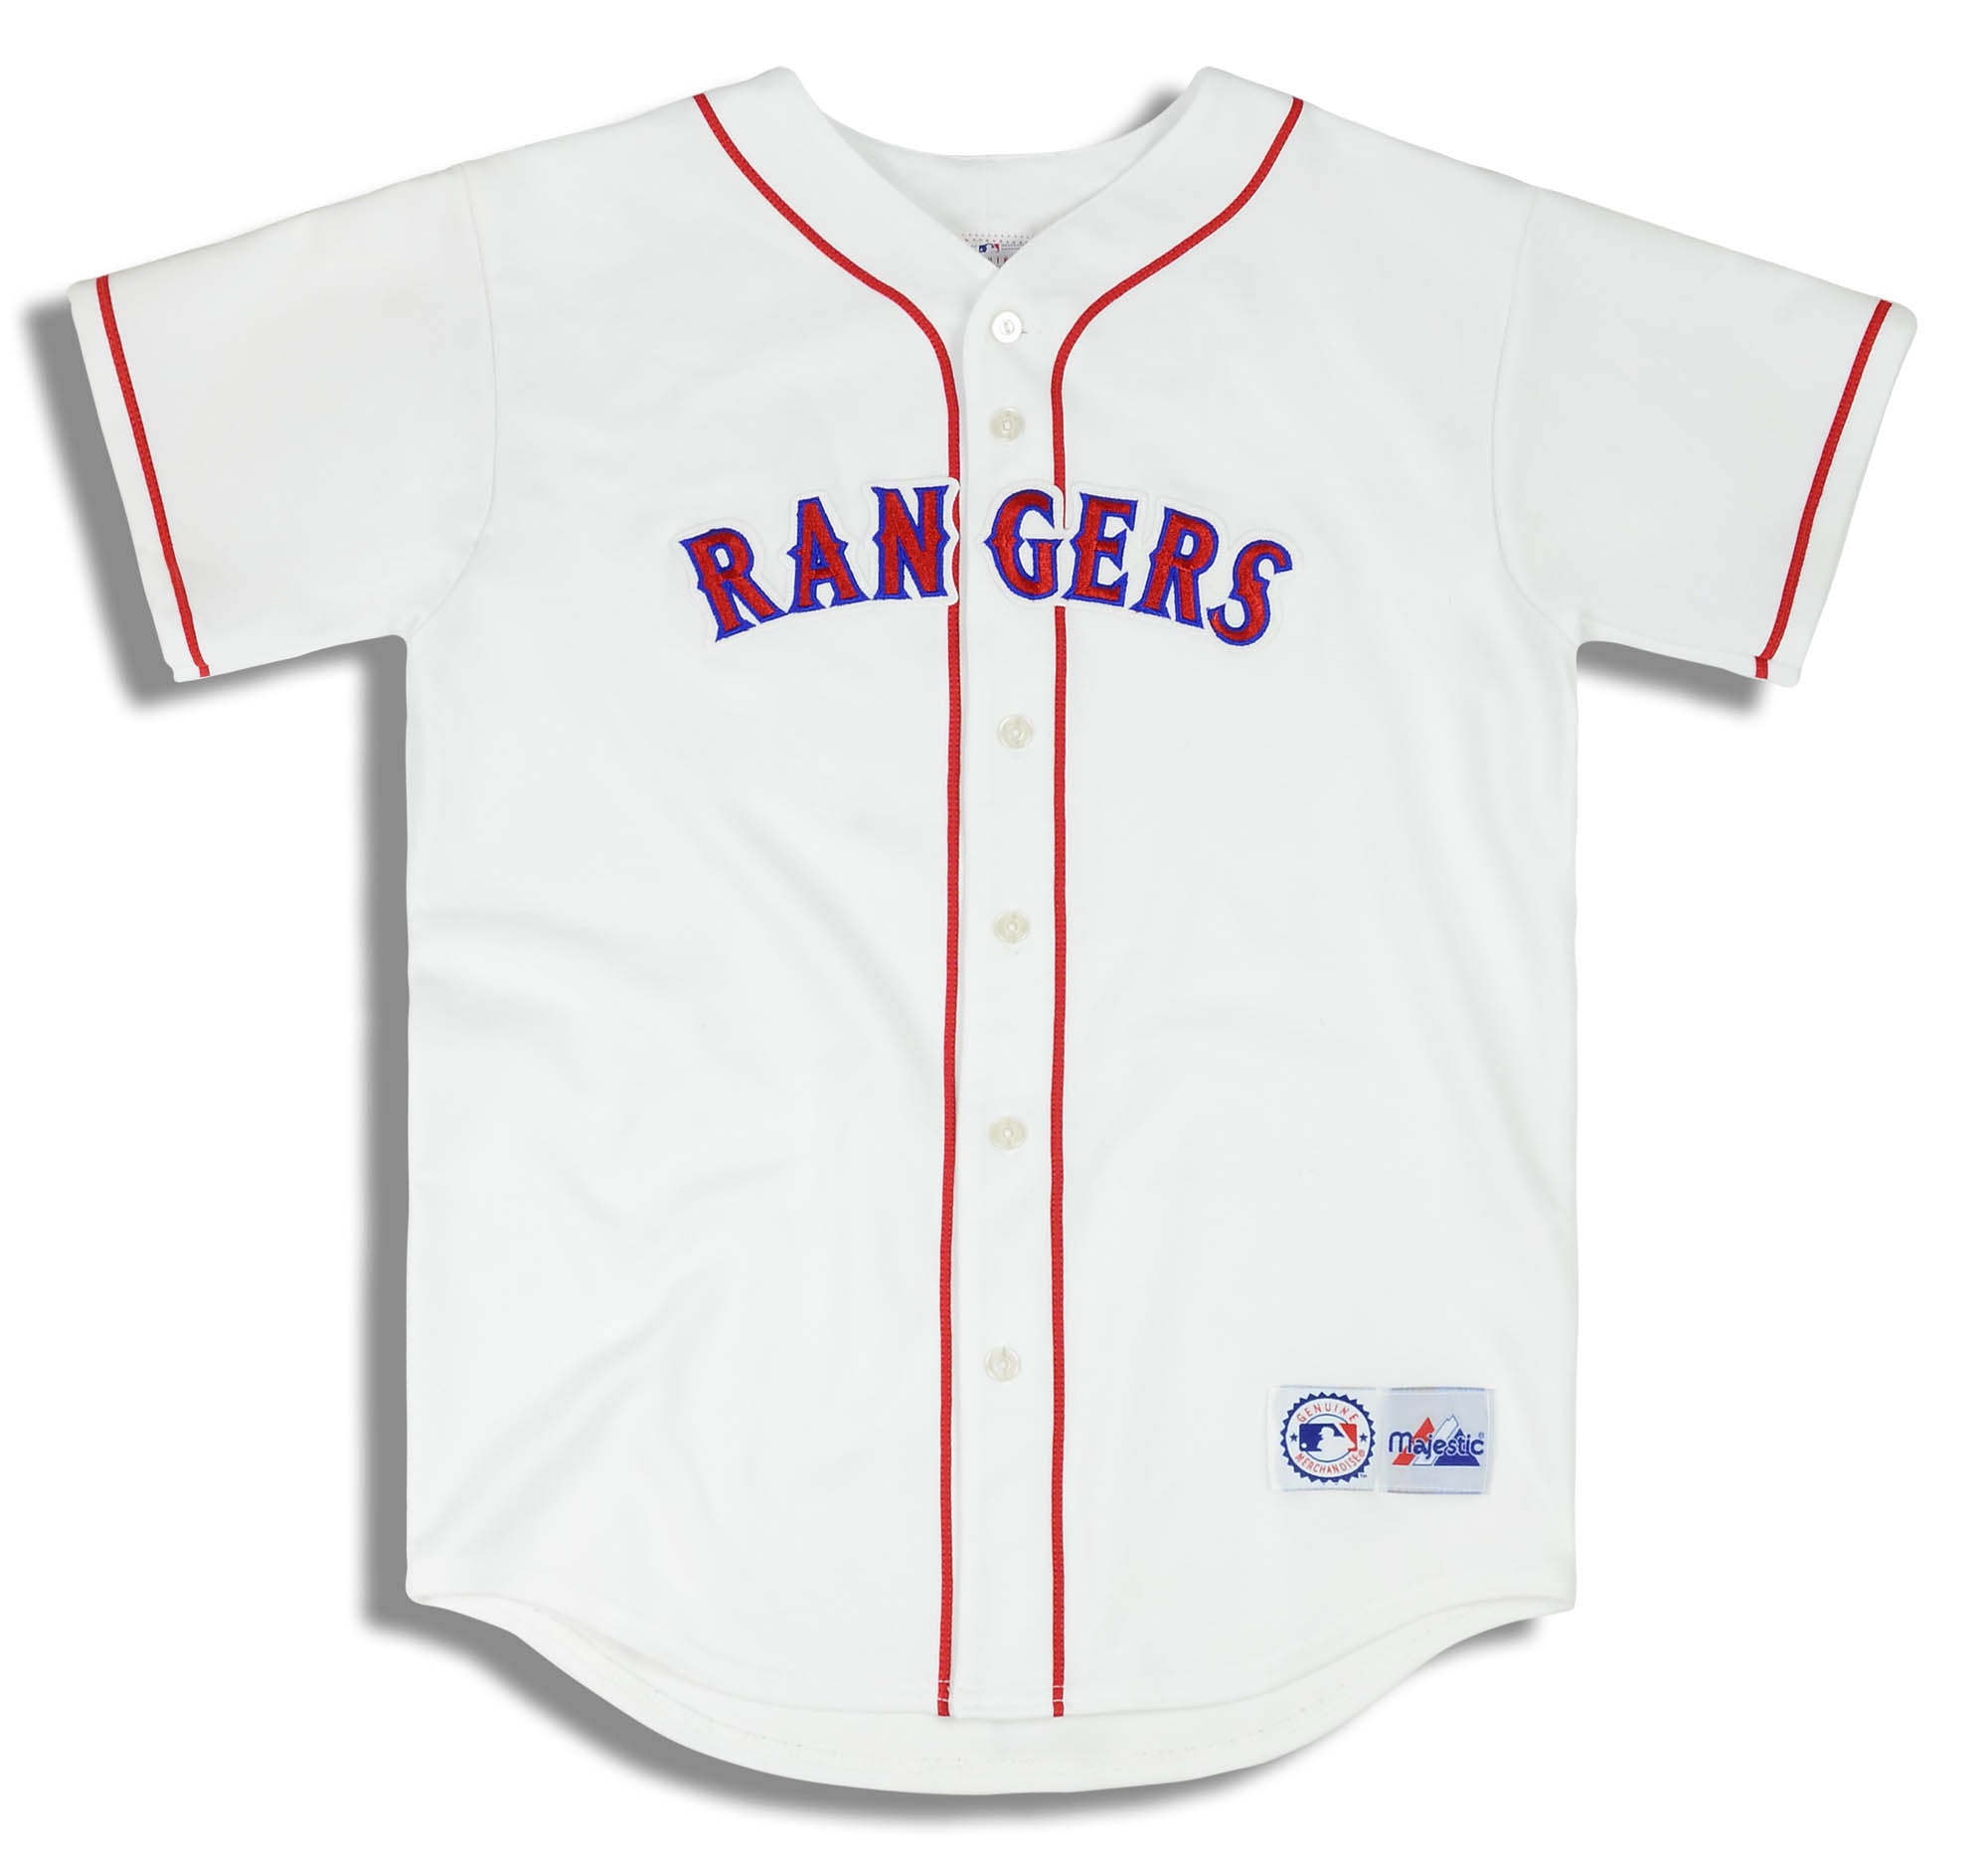 00's Texas Rangers Ambassador Authentic Majestic MLB Jersey Size